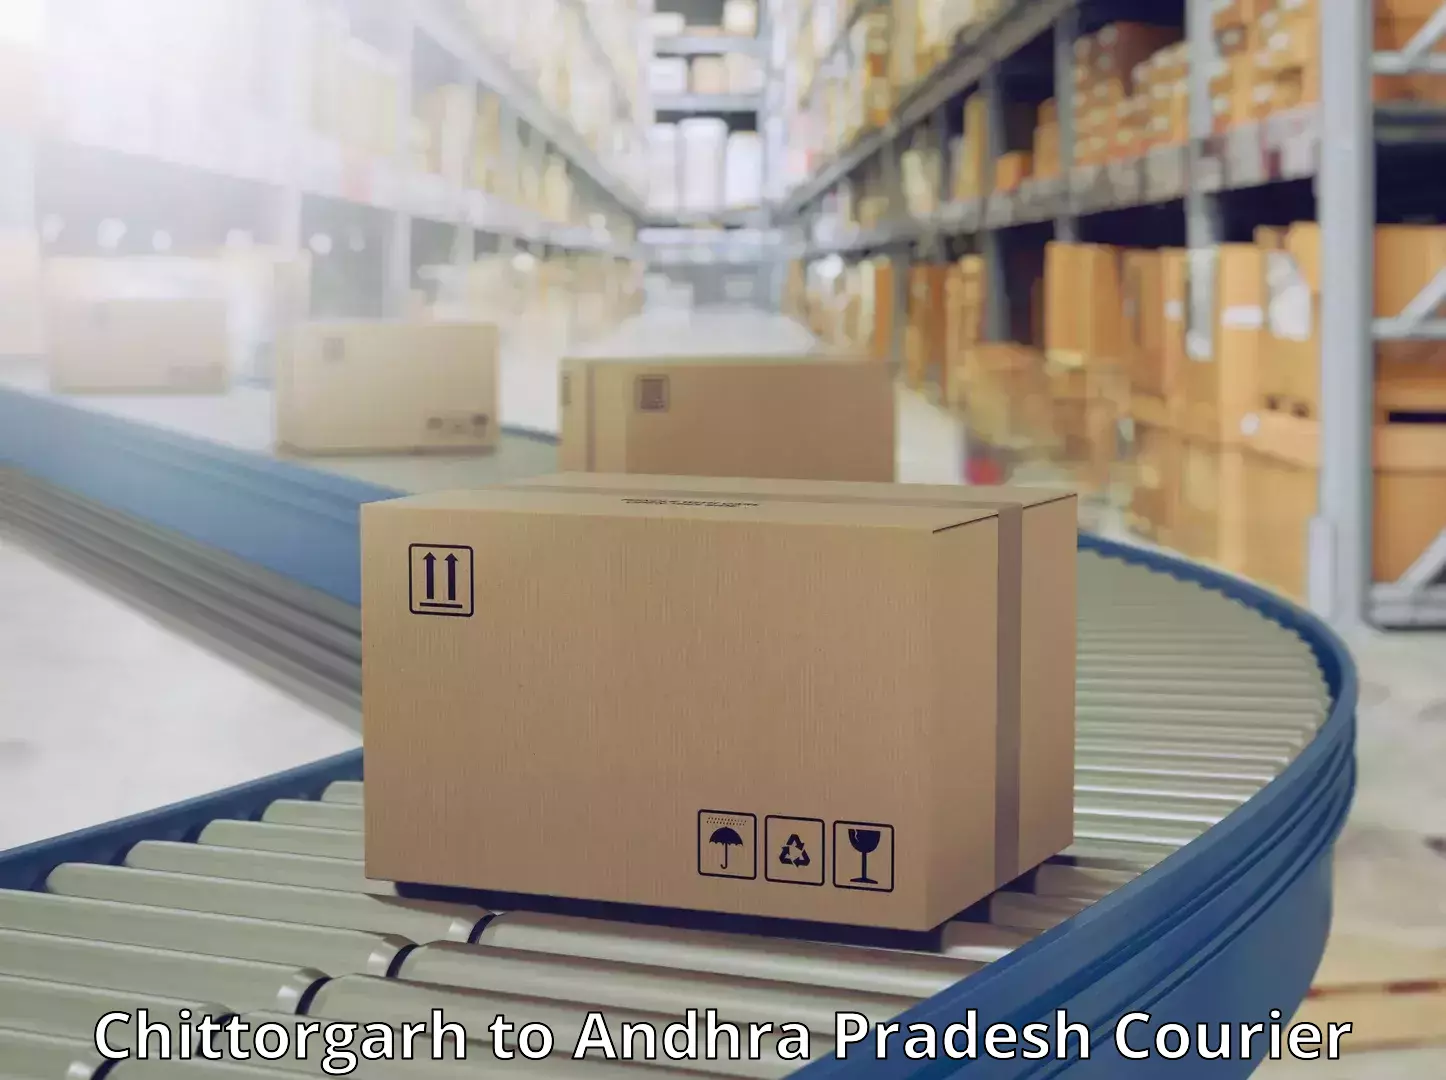 Express courier capabilities Chittorgarh to Andhra Pradesh